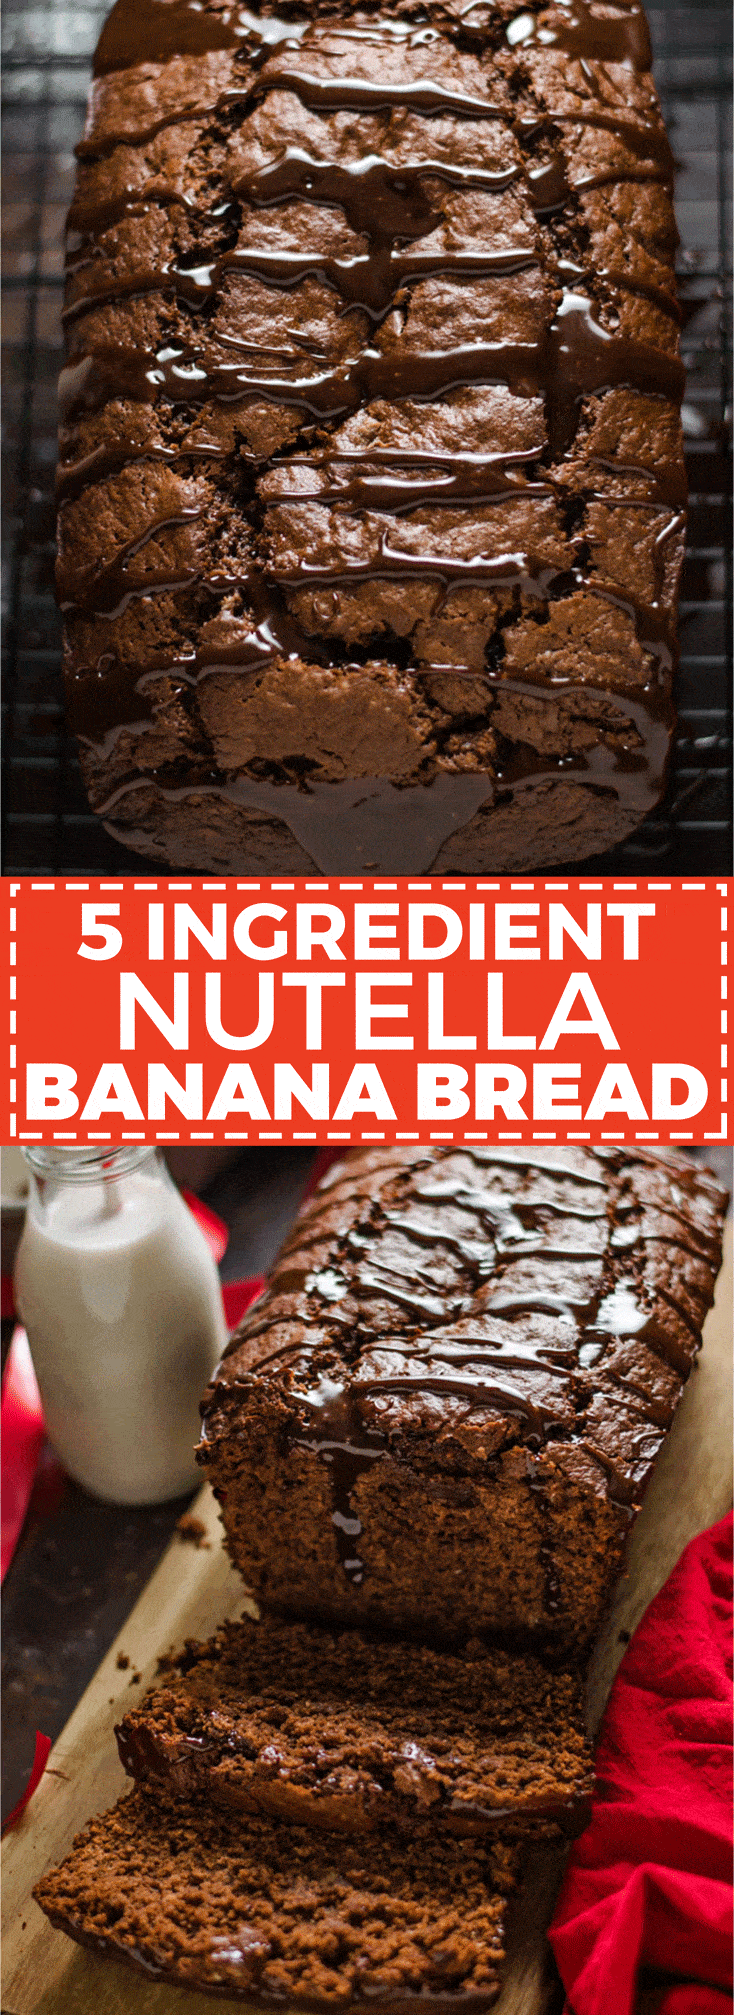 5 Ingredient Nutella Banana Bread. This moist, chocolate banana bread is unbelievably easy to make. | hostthetoast.com